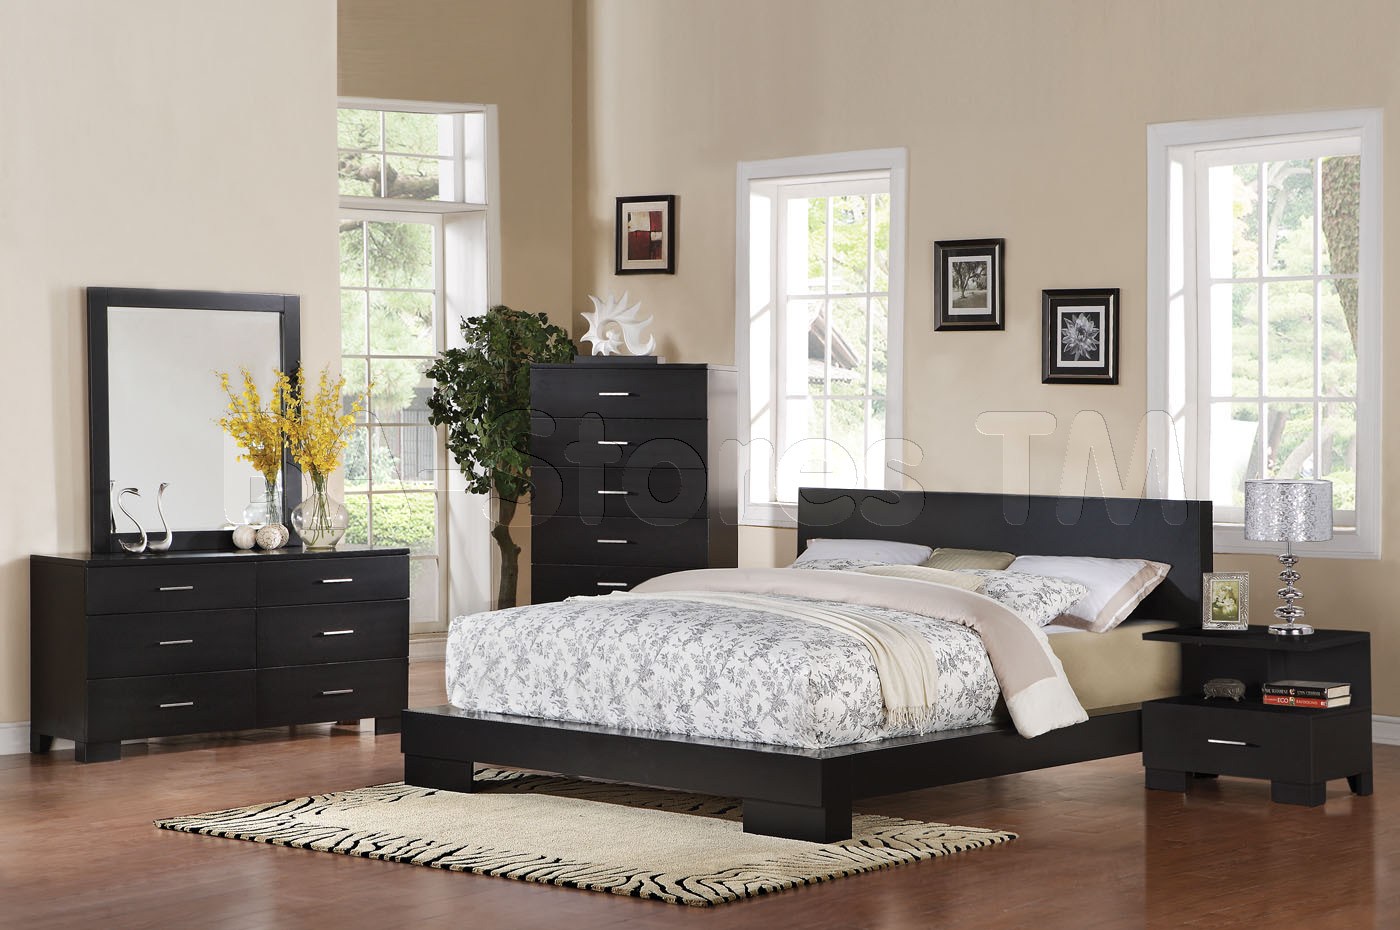 black lacquer bedroom furniture photo - 9